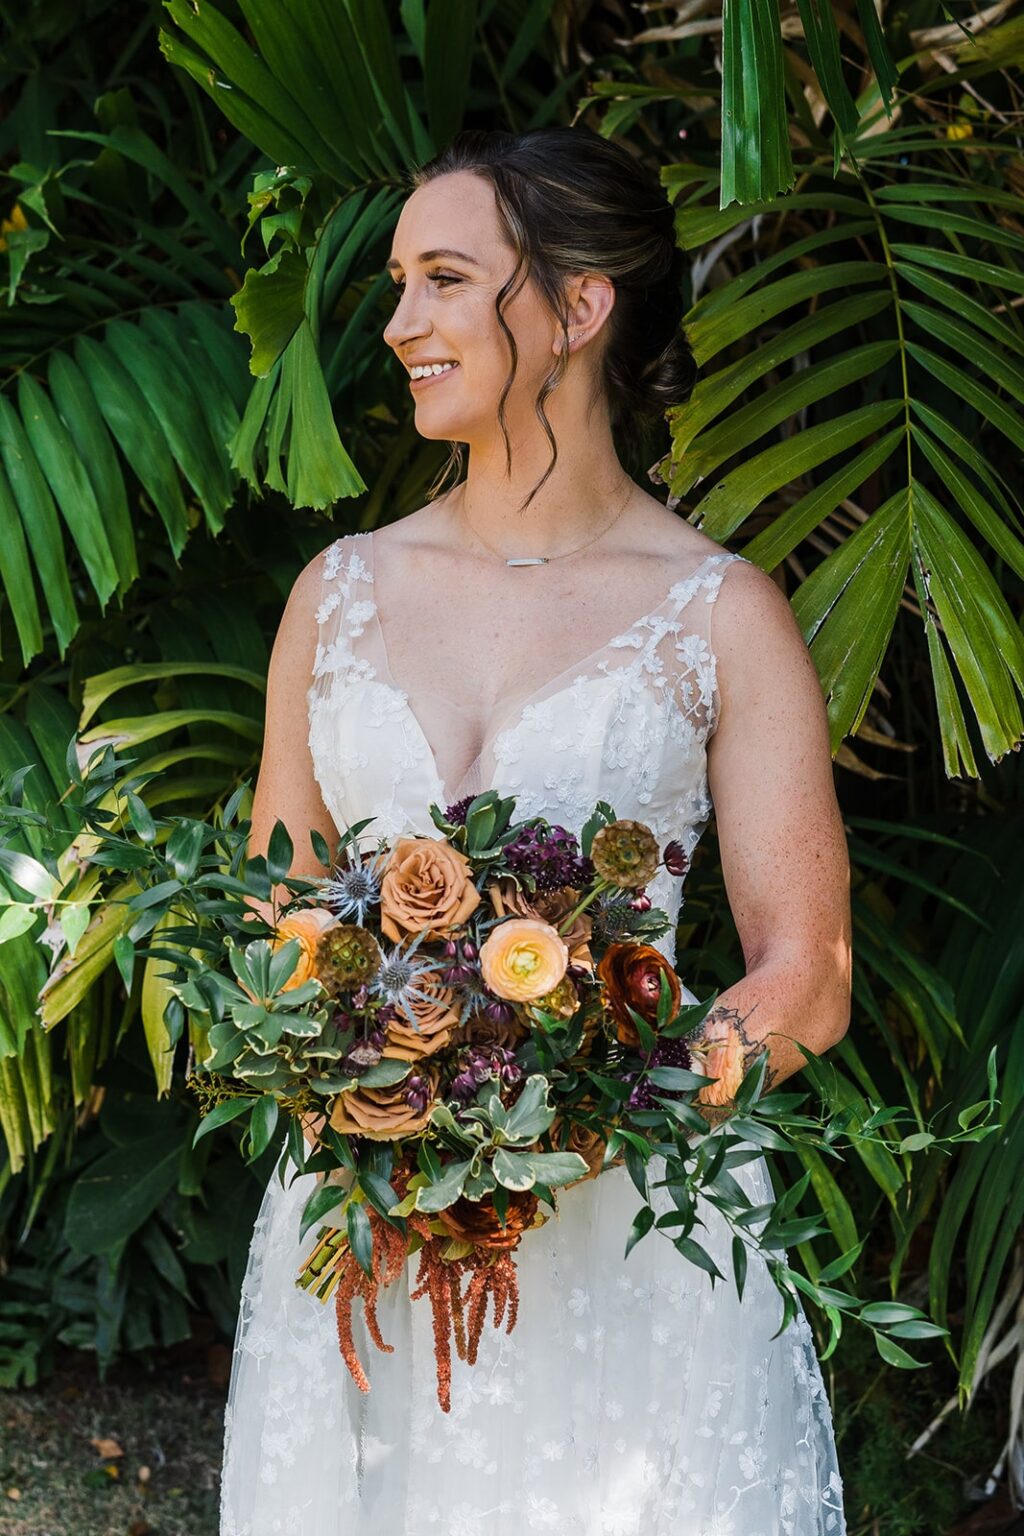 Fun-Filled Two Day Wedding on Kauai - Between the Pine